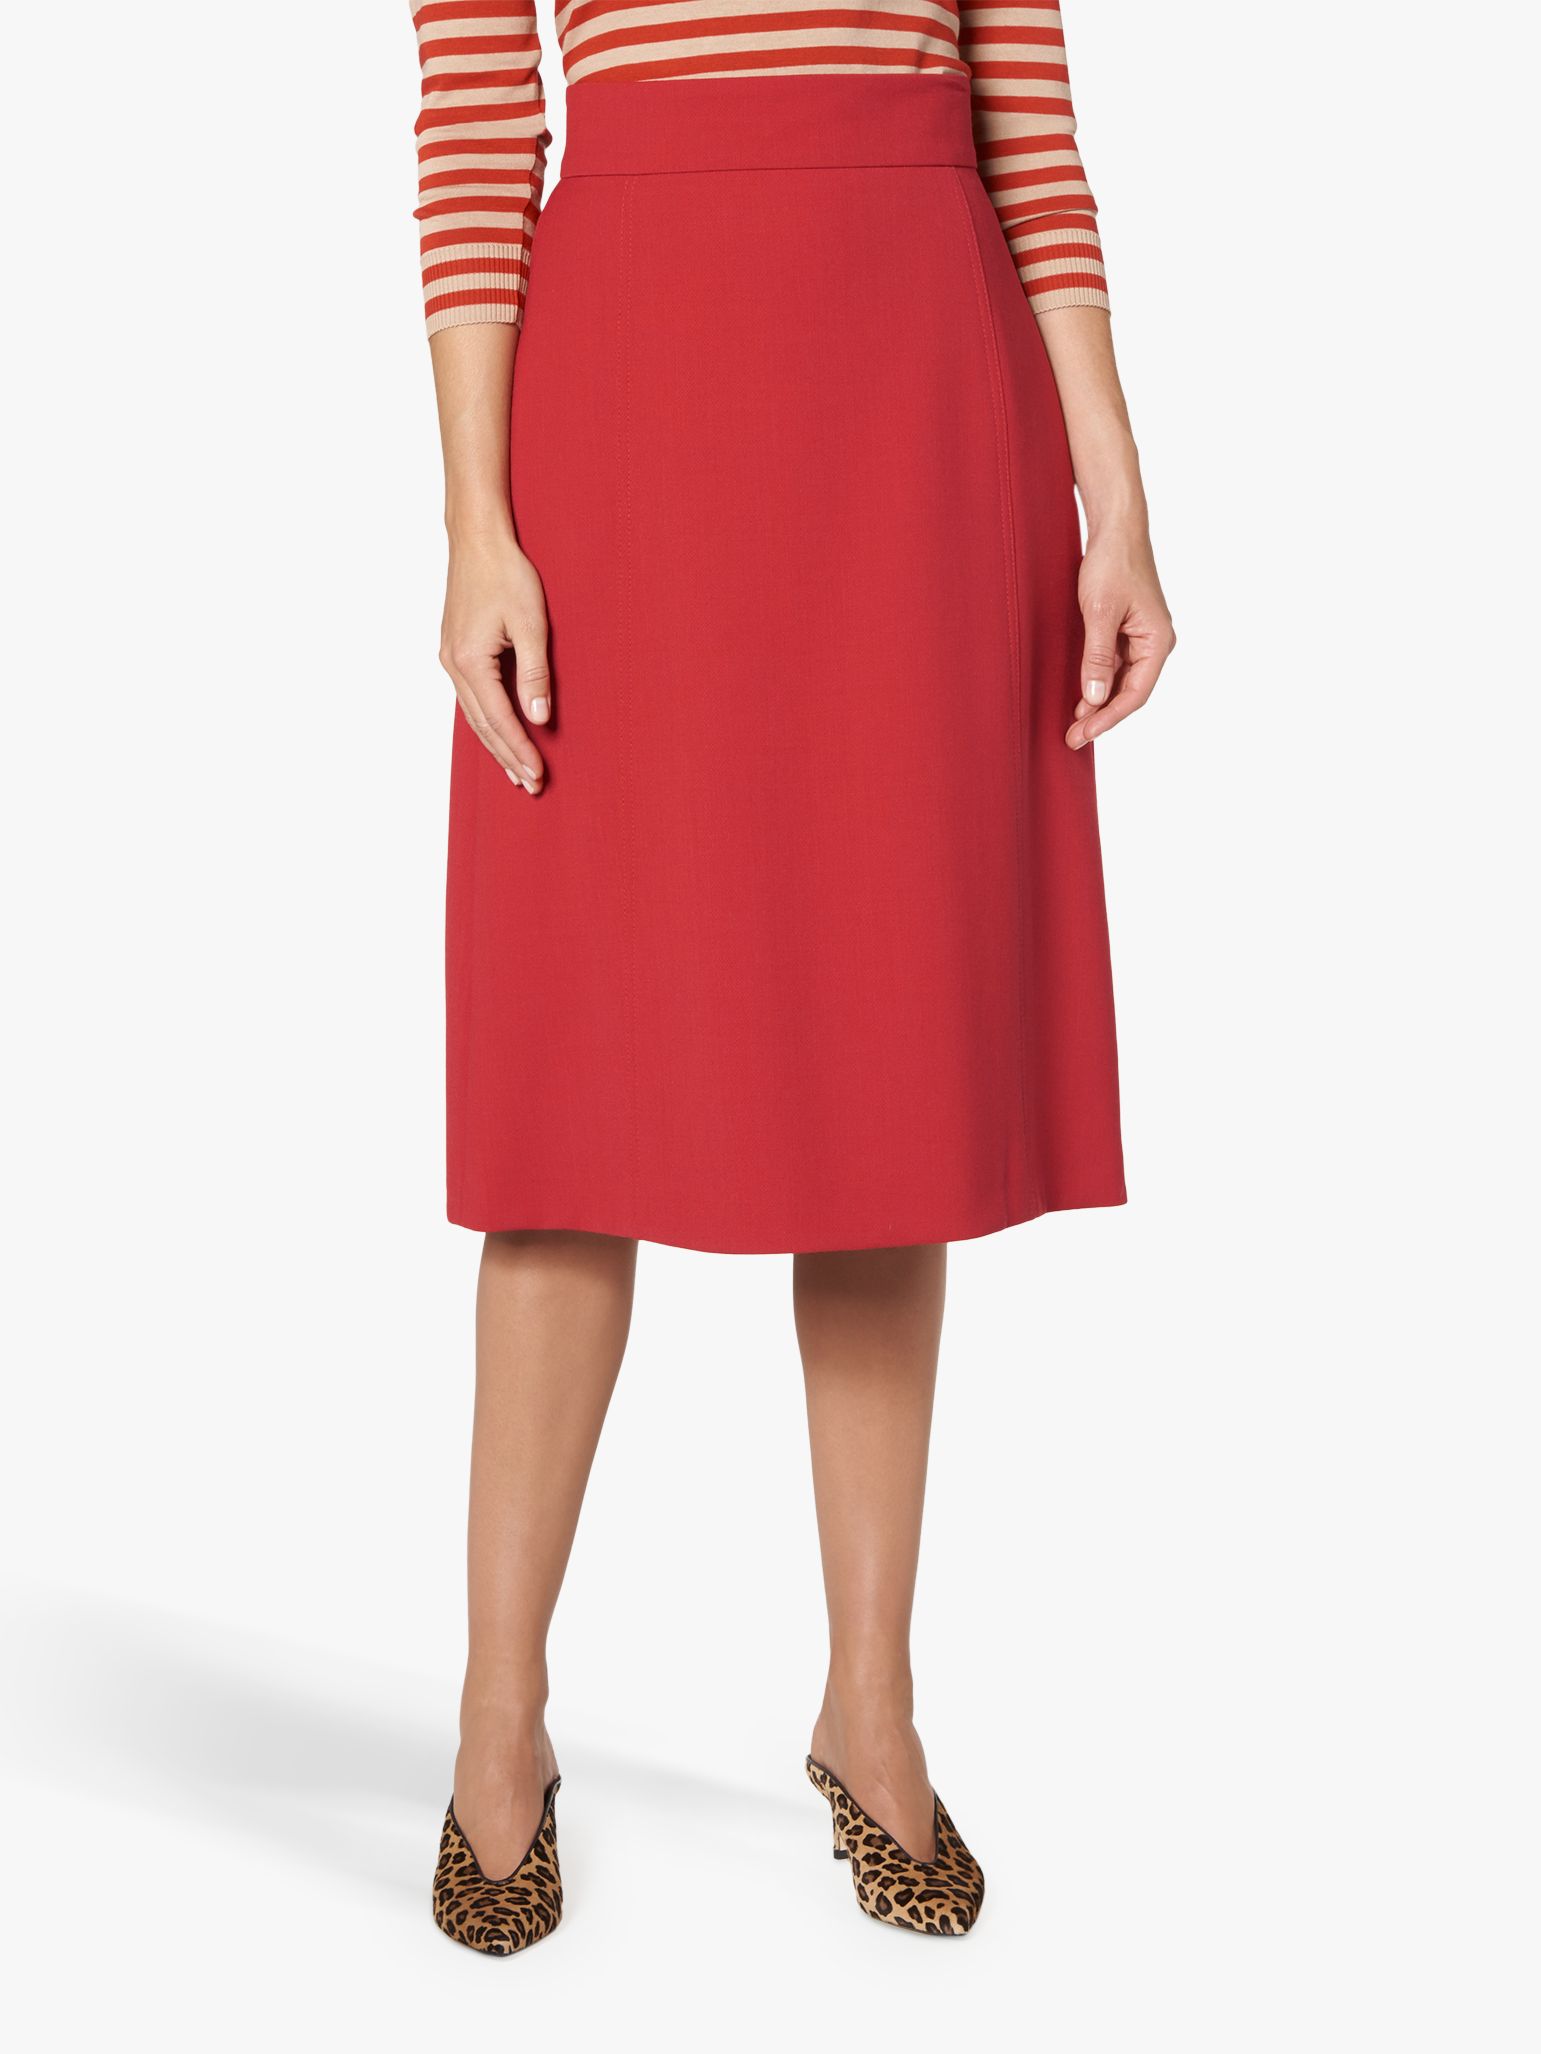 L.K.Bennett Adriana A-Line Skirt, Red